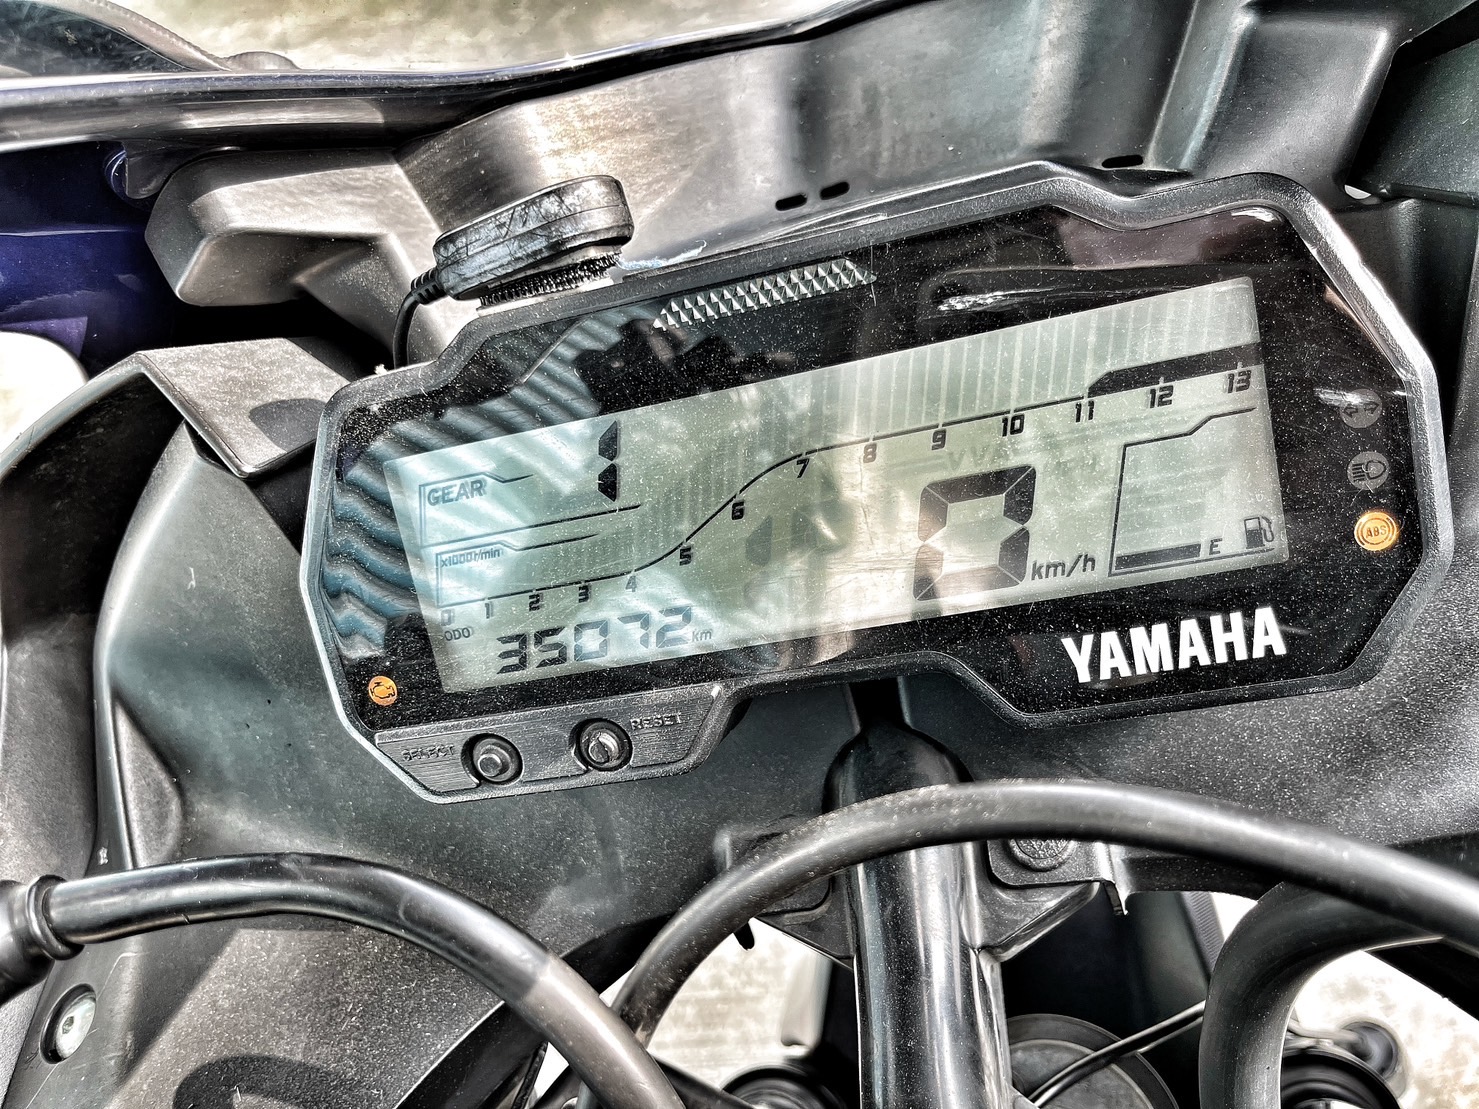 YAMAHA YZF-R15 - 中古/二手車出售中 行車記錄器 手機架 可調式拉桿 小資族二手重機買賣 | 小資族二手重機買賣